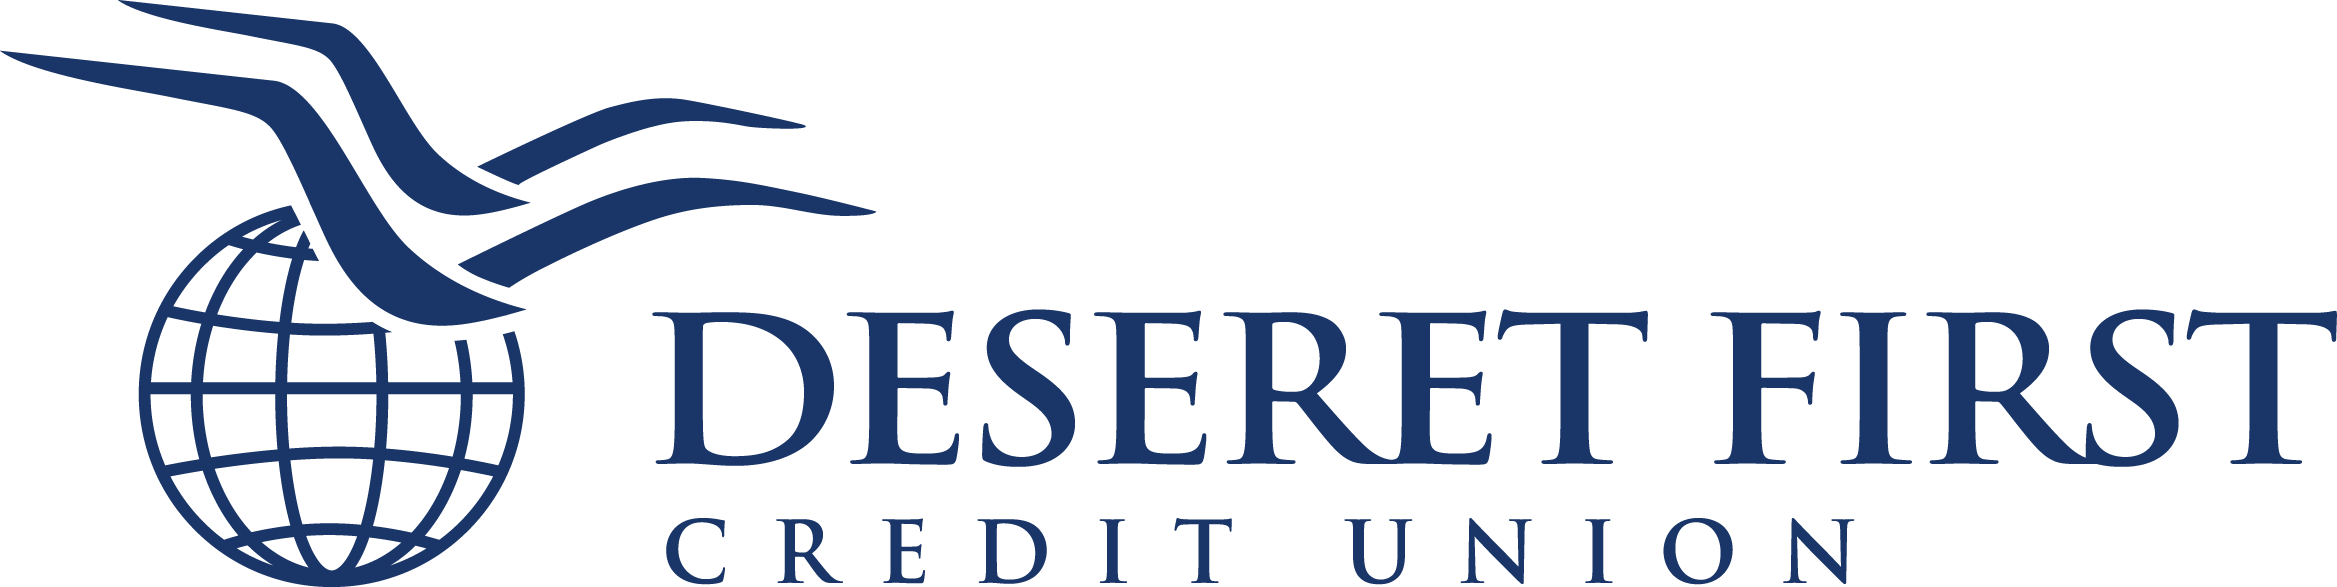 Deseret Logo - Deseret First Credit Union | DFCU